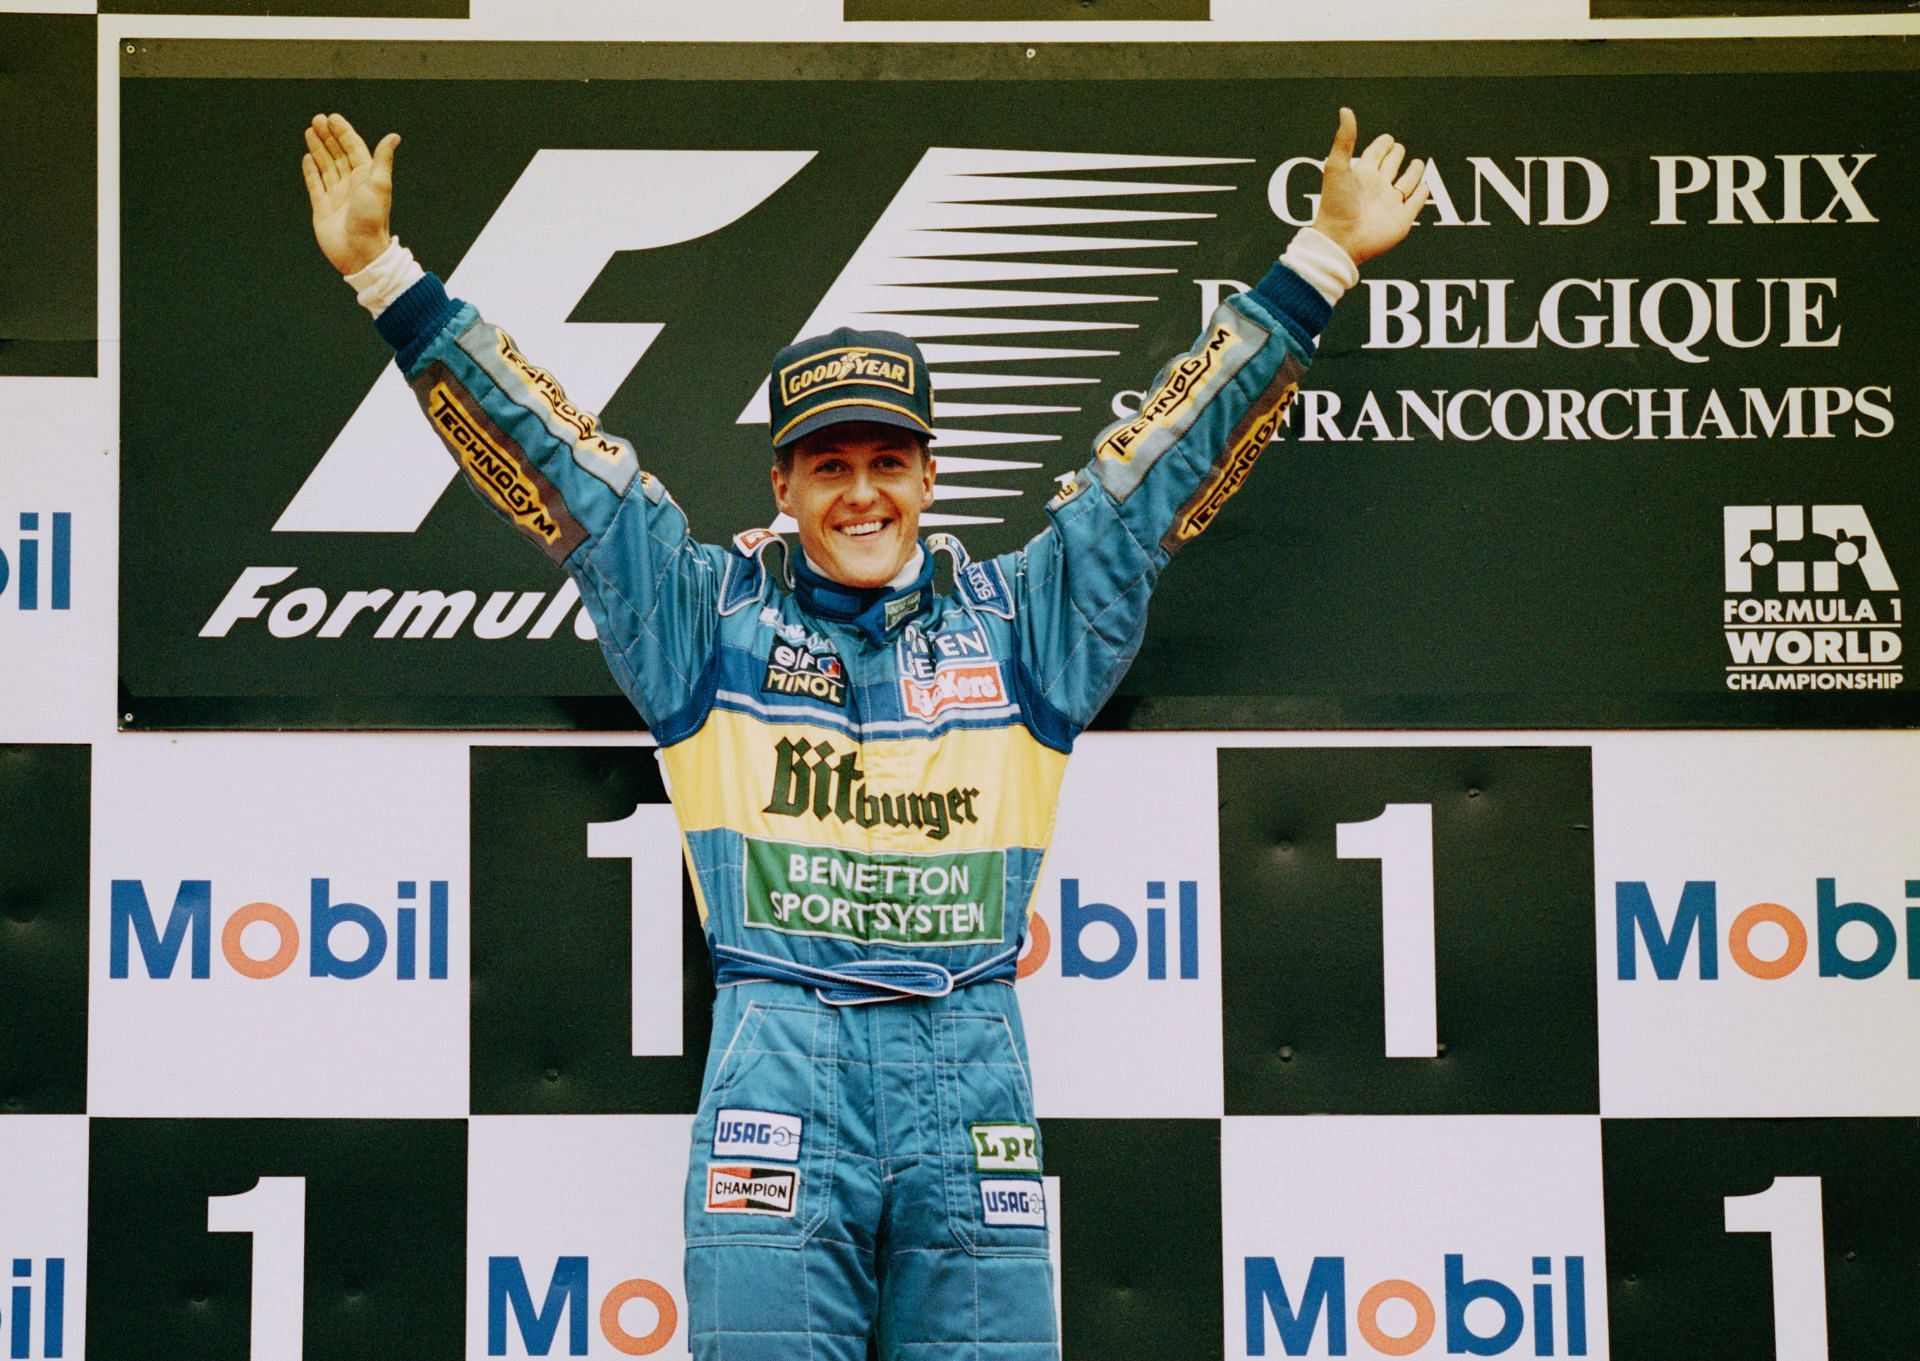 World Champion Michael Schumacher celebrates winning the 1995 Belgian Grand Prix at the Circuit de Spa-Francorchamps in Spa Francorchamps, Belgium. (Photo by Ben Radford/Getty Images)